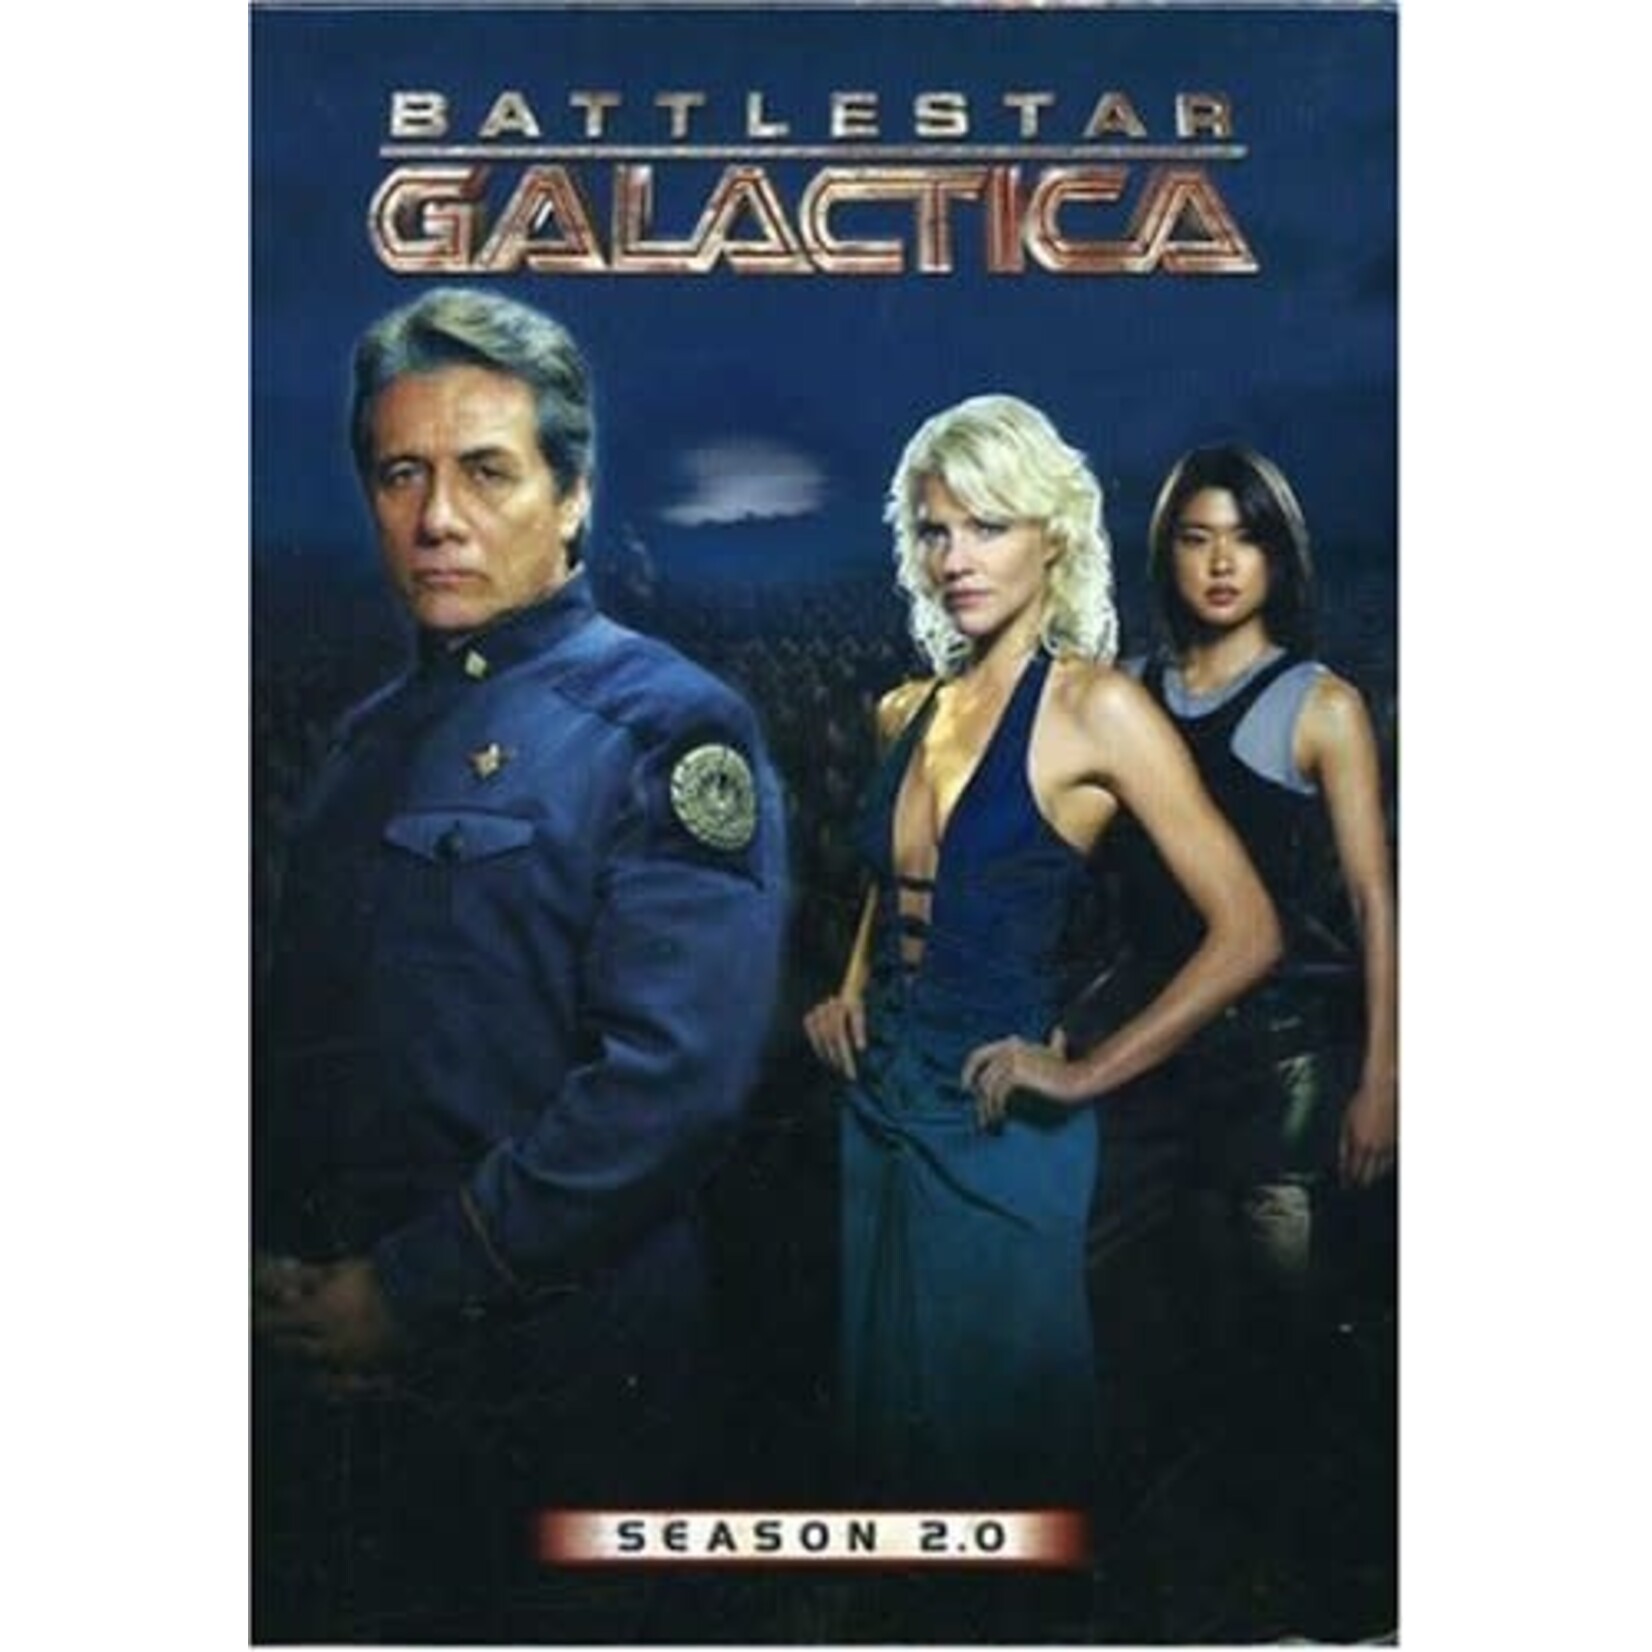 Battlestar Galactica (New Series) - Season 2.0 [USED DVD]